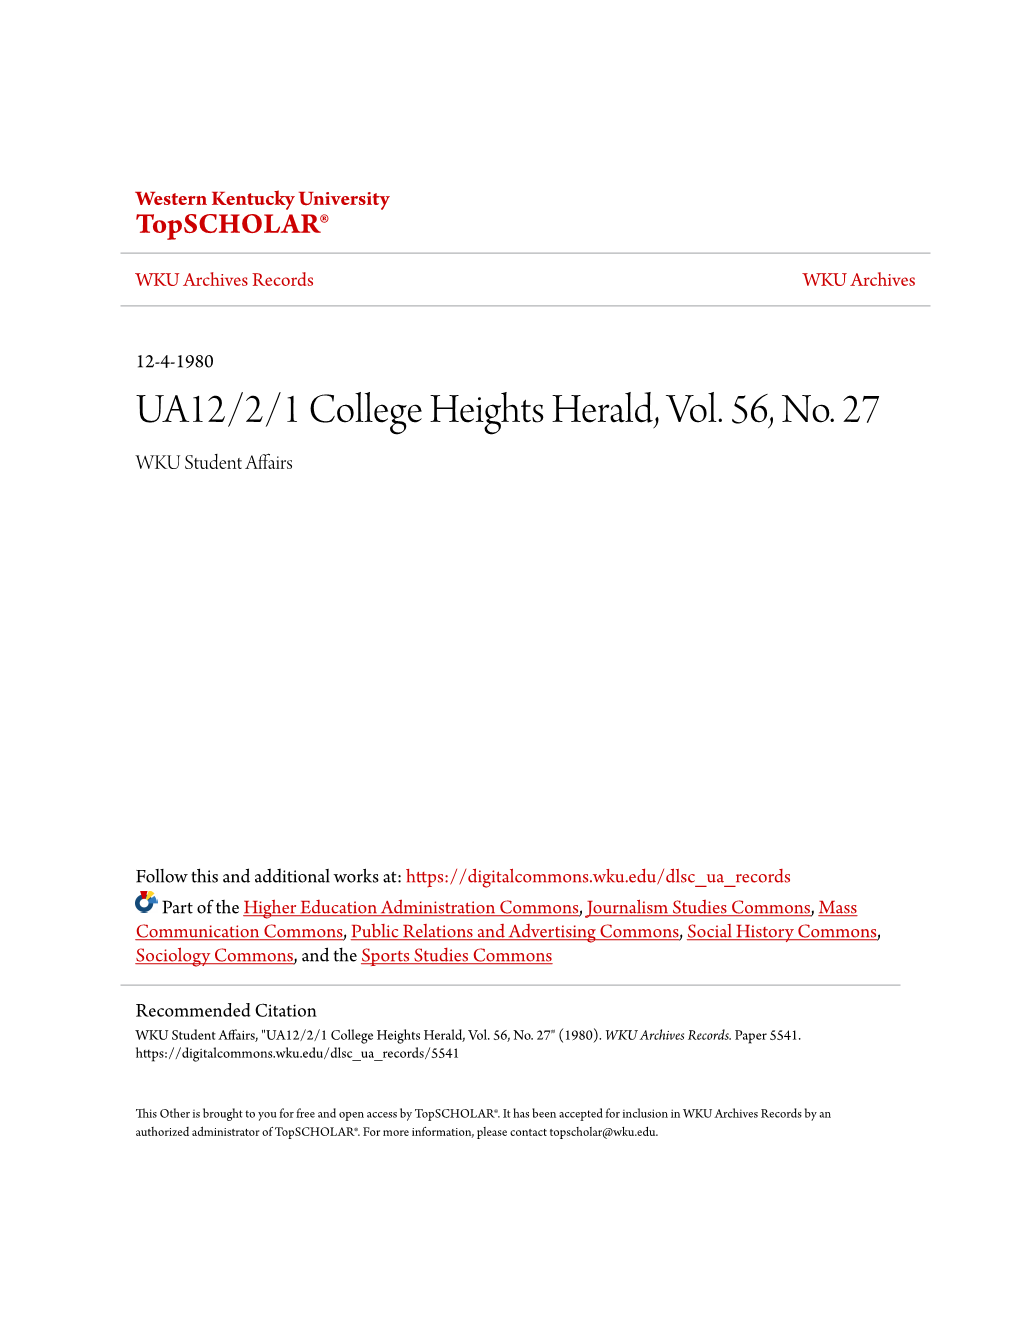 UA12/2/1 College Heights Herald, Vol. 56, No. 27 WKU Student Affairs